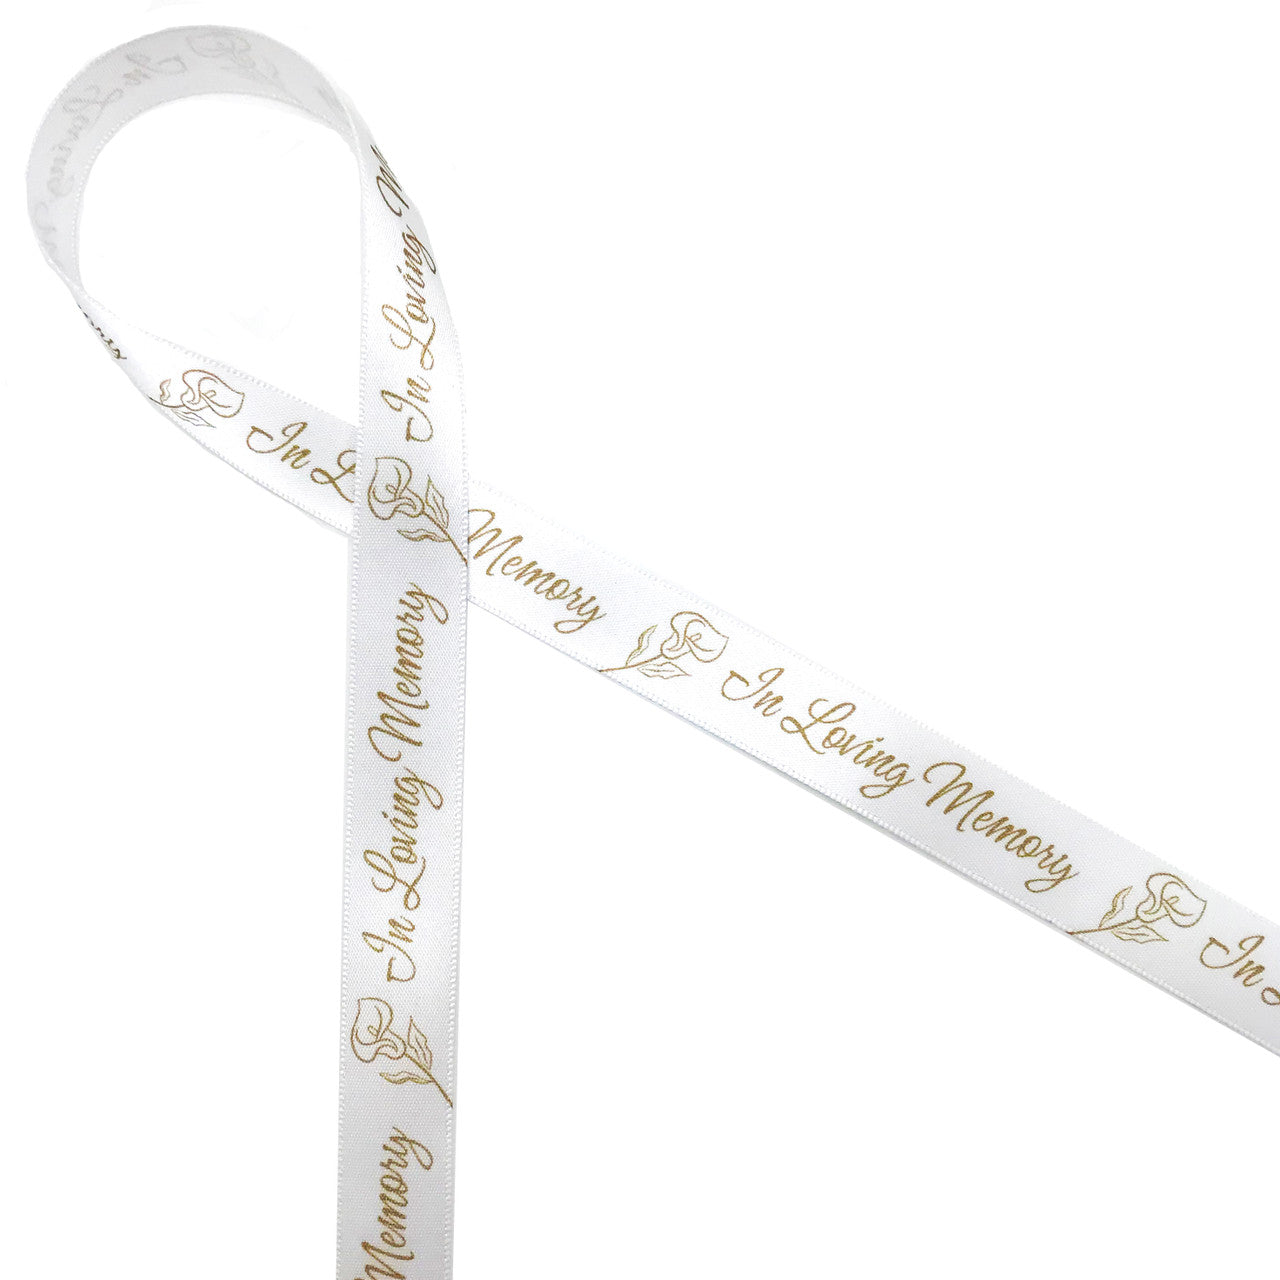 Memorial Ribbon In Loving Memory in gold or silver font printed on 5/8" white single face satin